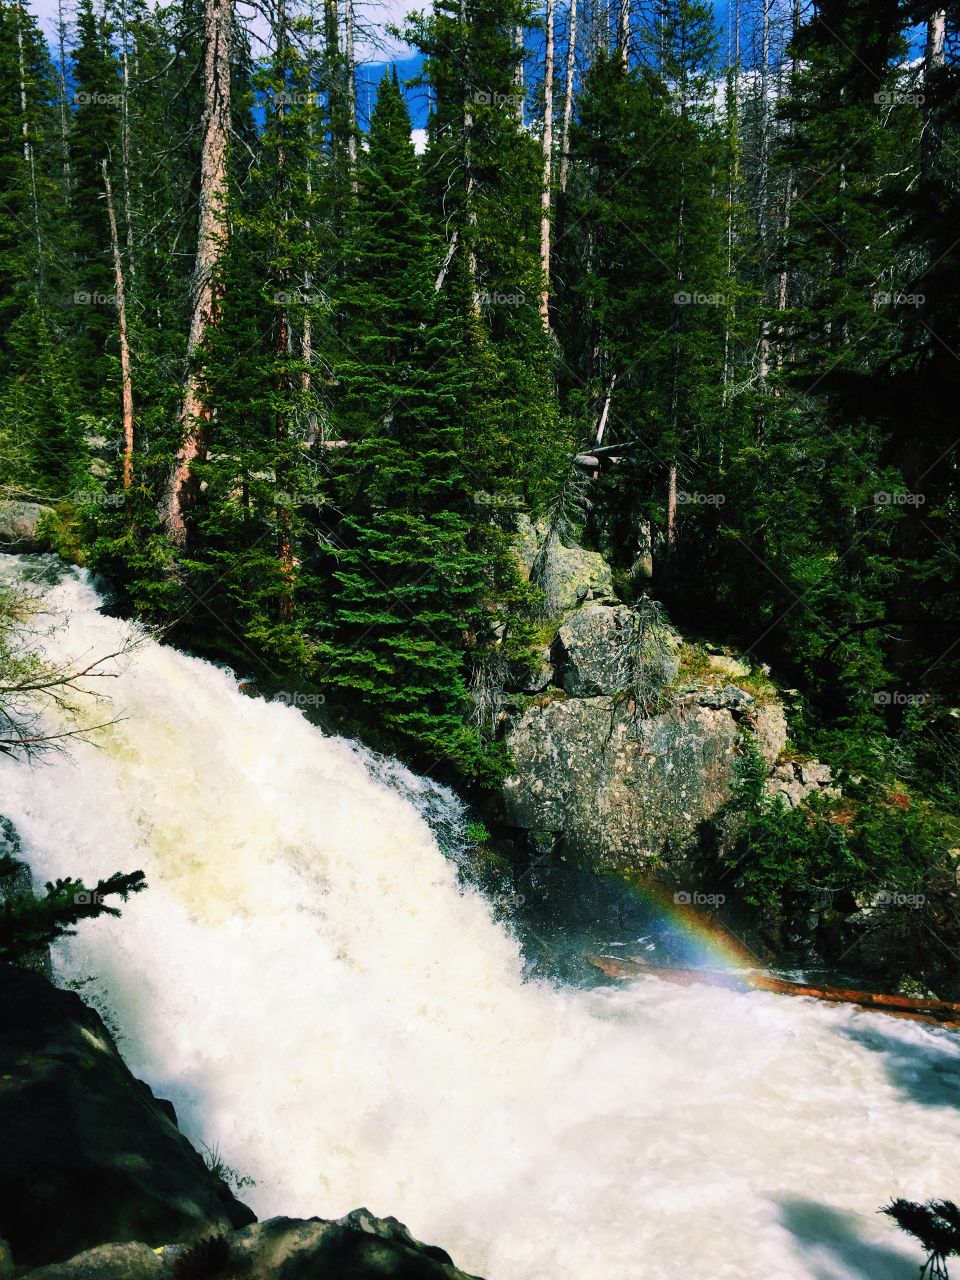 Waterfall in steamboat springs, Colorado